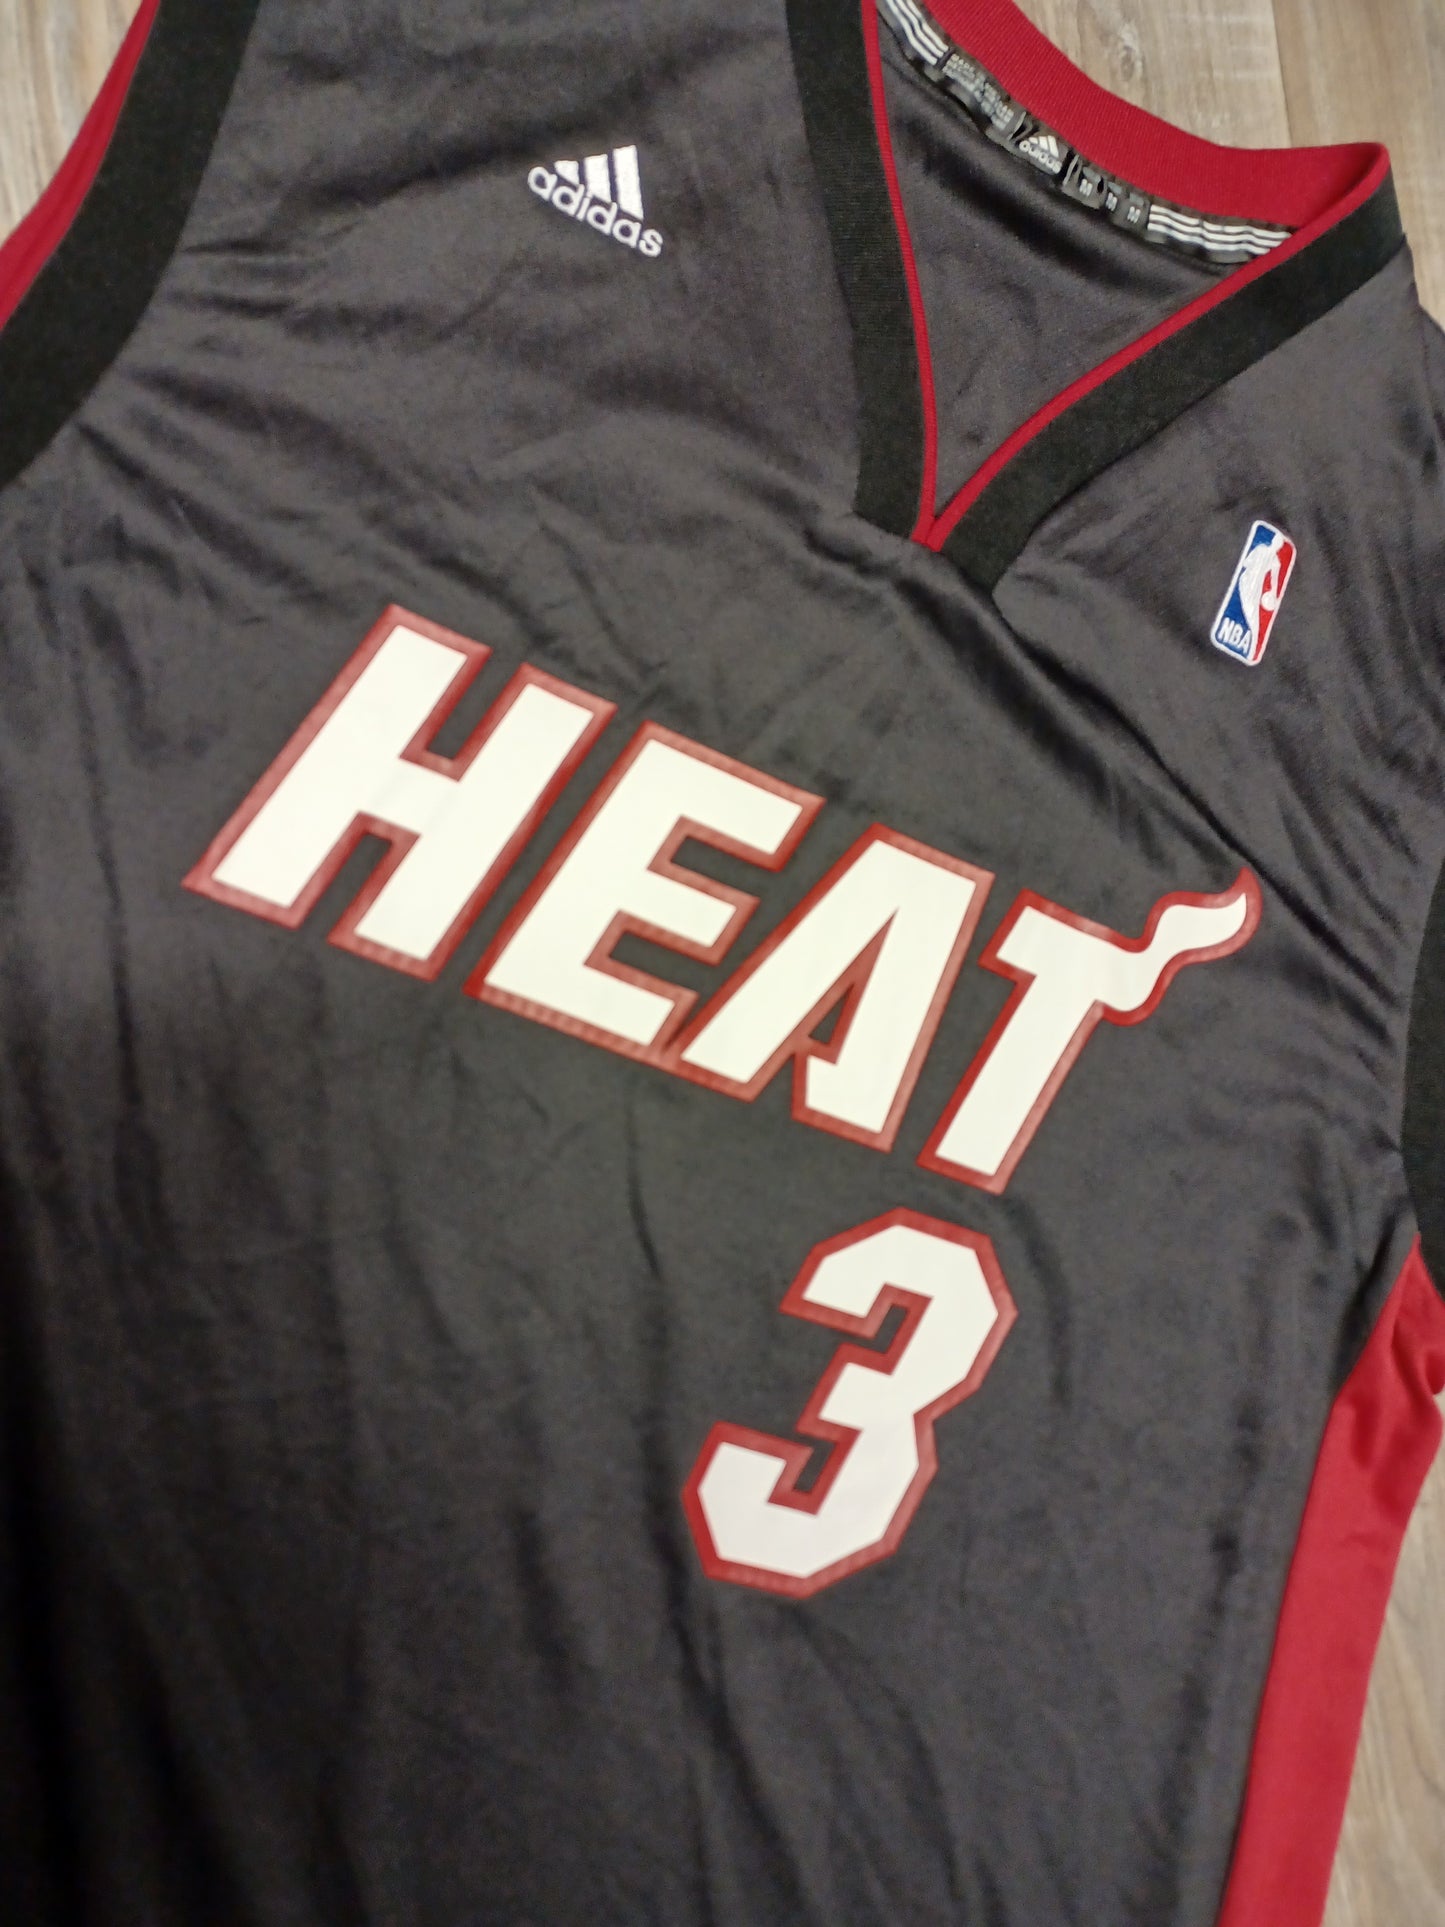 Dwyane Wade Miami Heat Jersey Size Medium